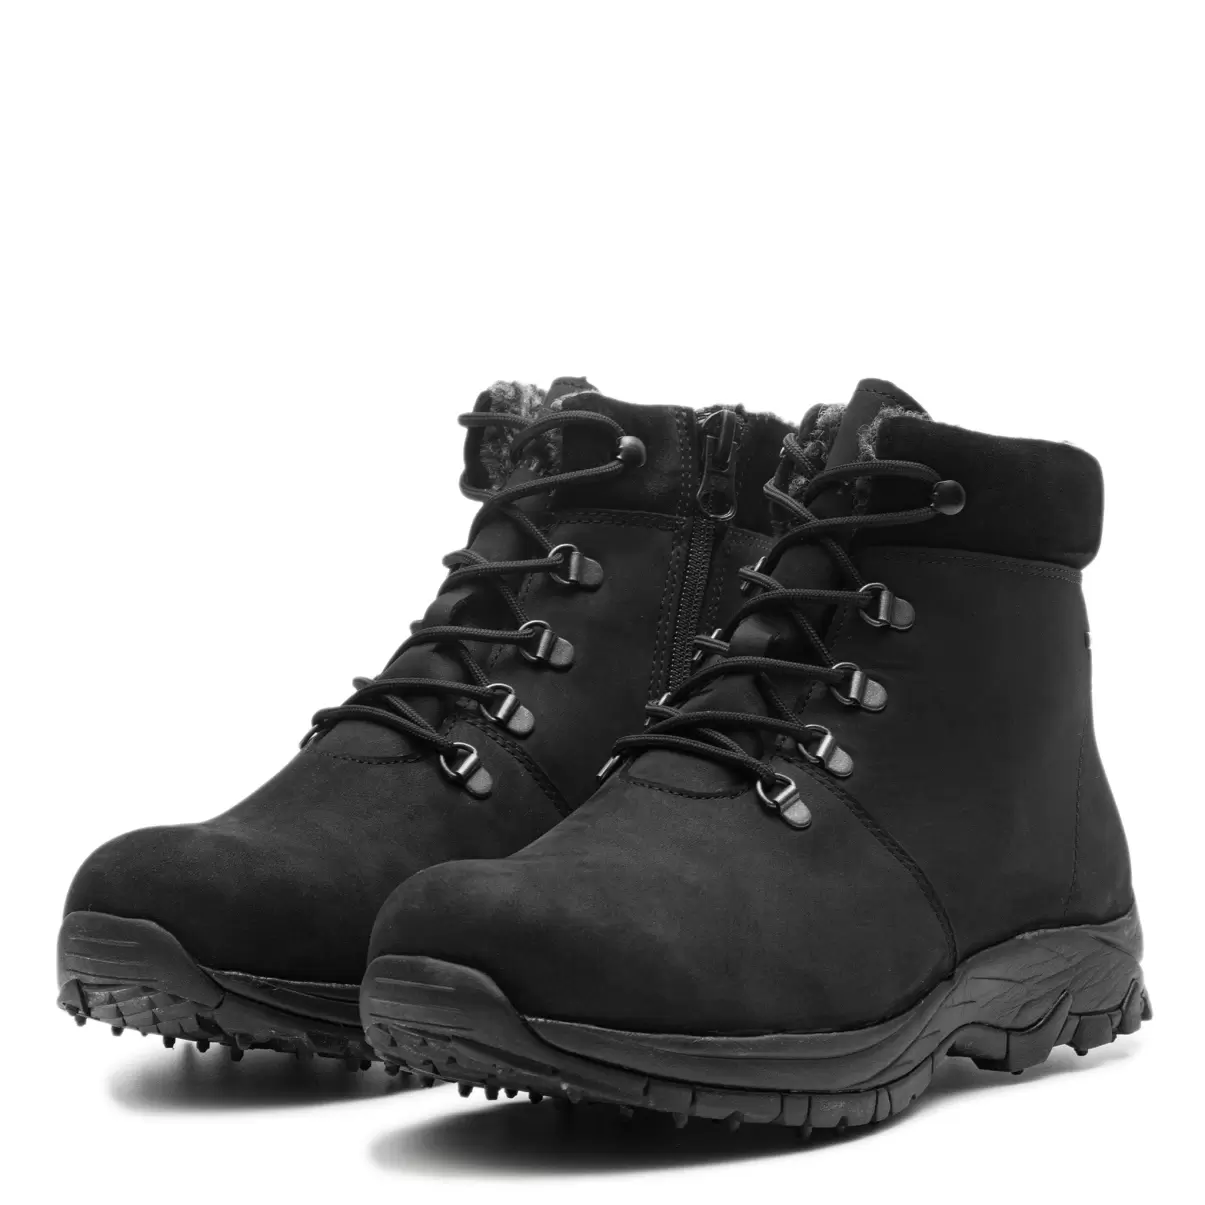 Men Winter Boots Kokko Men's Pomar+ Gore-Tex Spike Winter Boots Pomarfin Oy Black Waxy/Partel.l/Spike Sole - 2